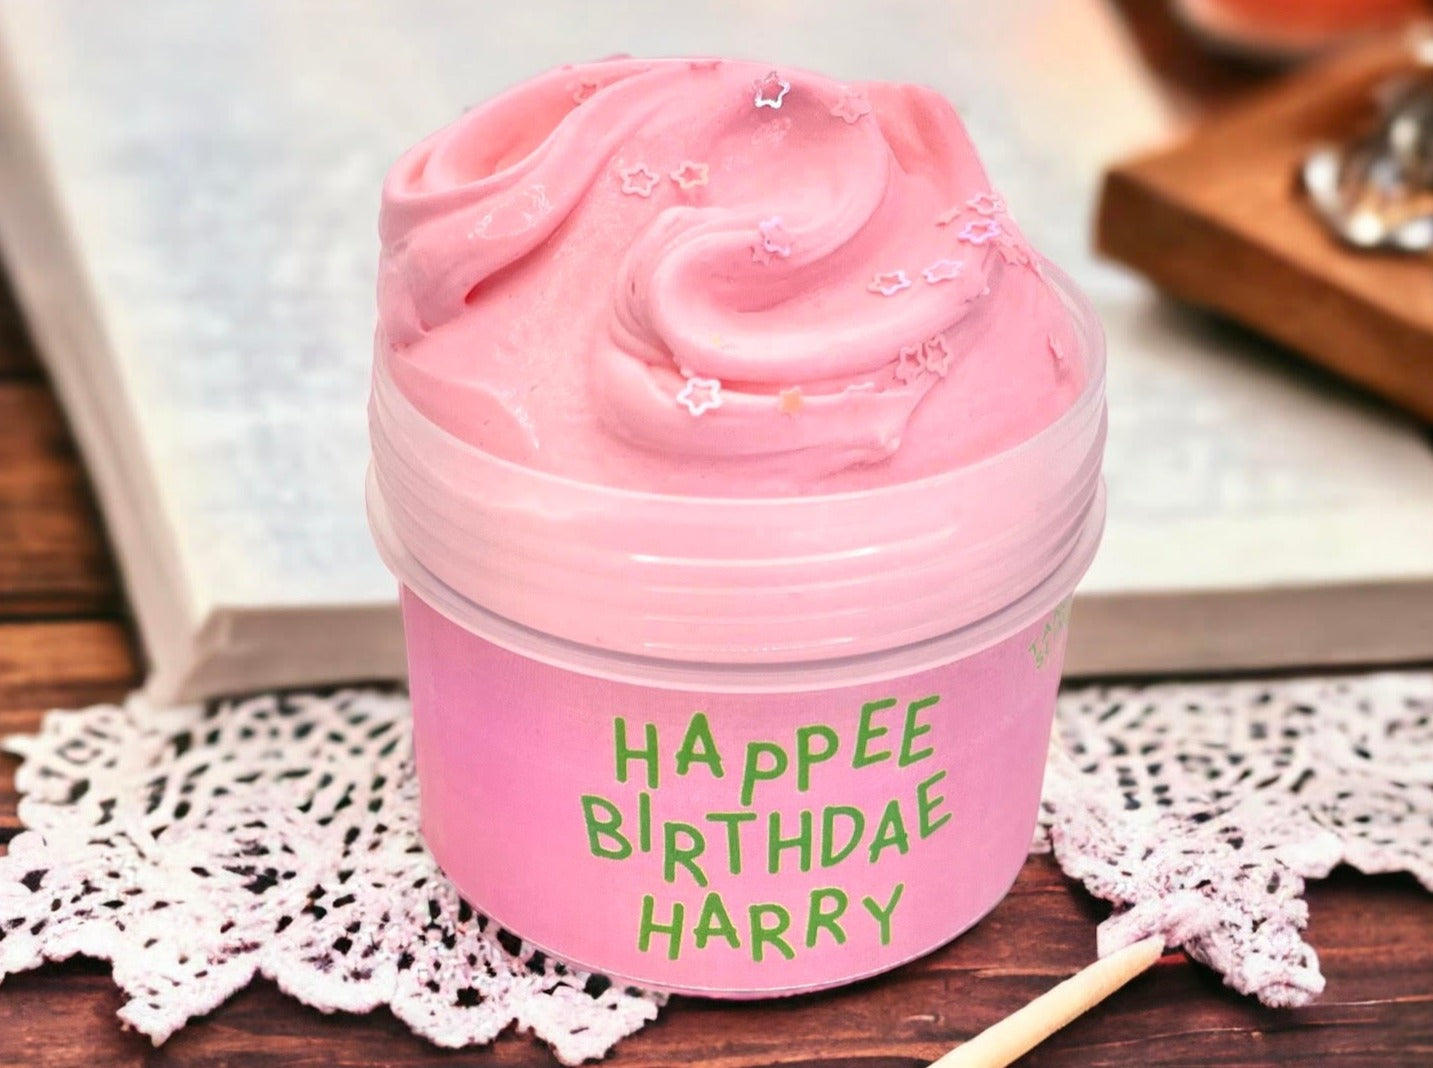 Harry Potter HAPPEE BIRTHDAE HARRY Birthday Cake Cookie Tin Box